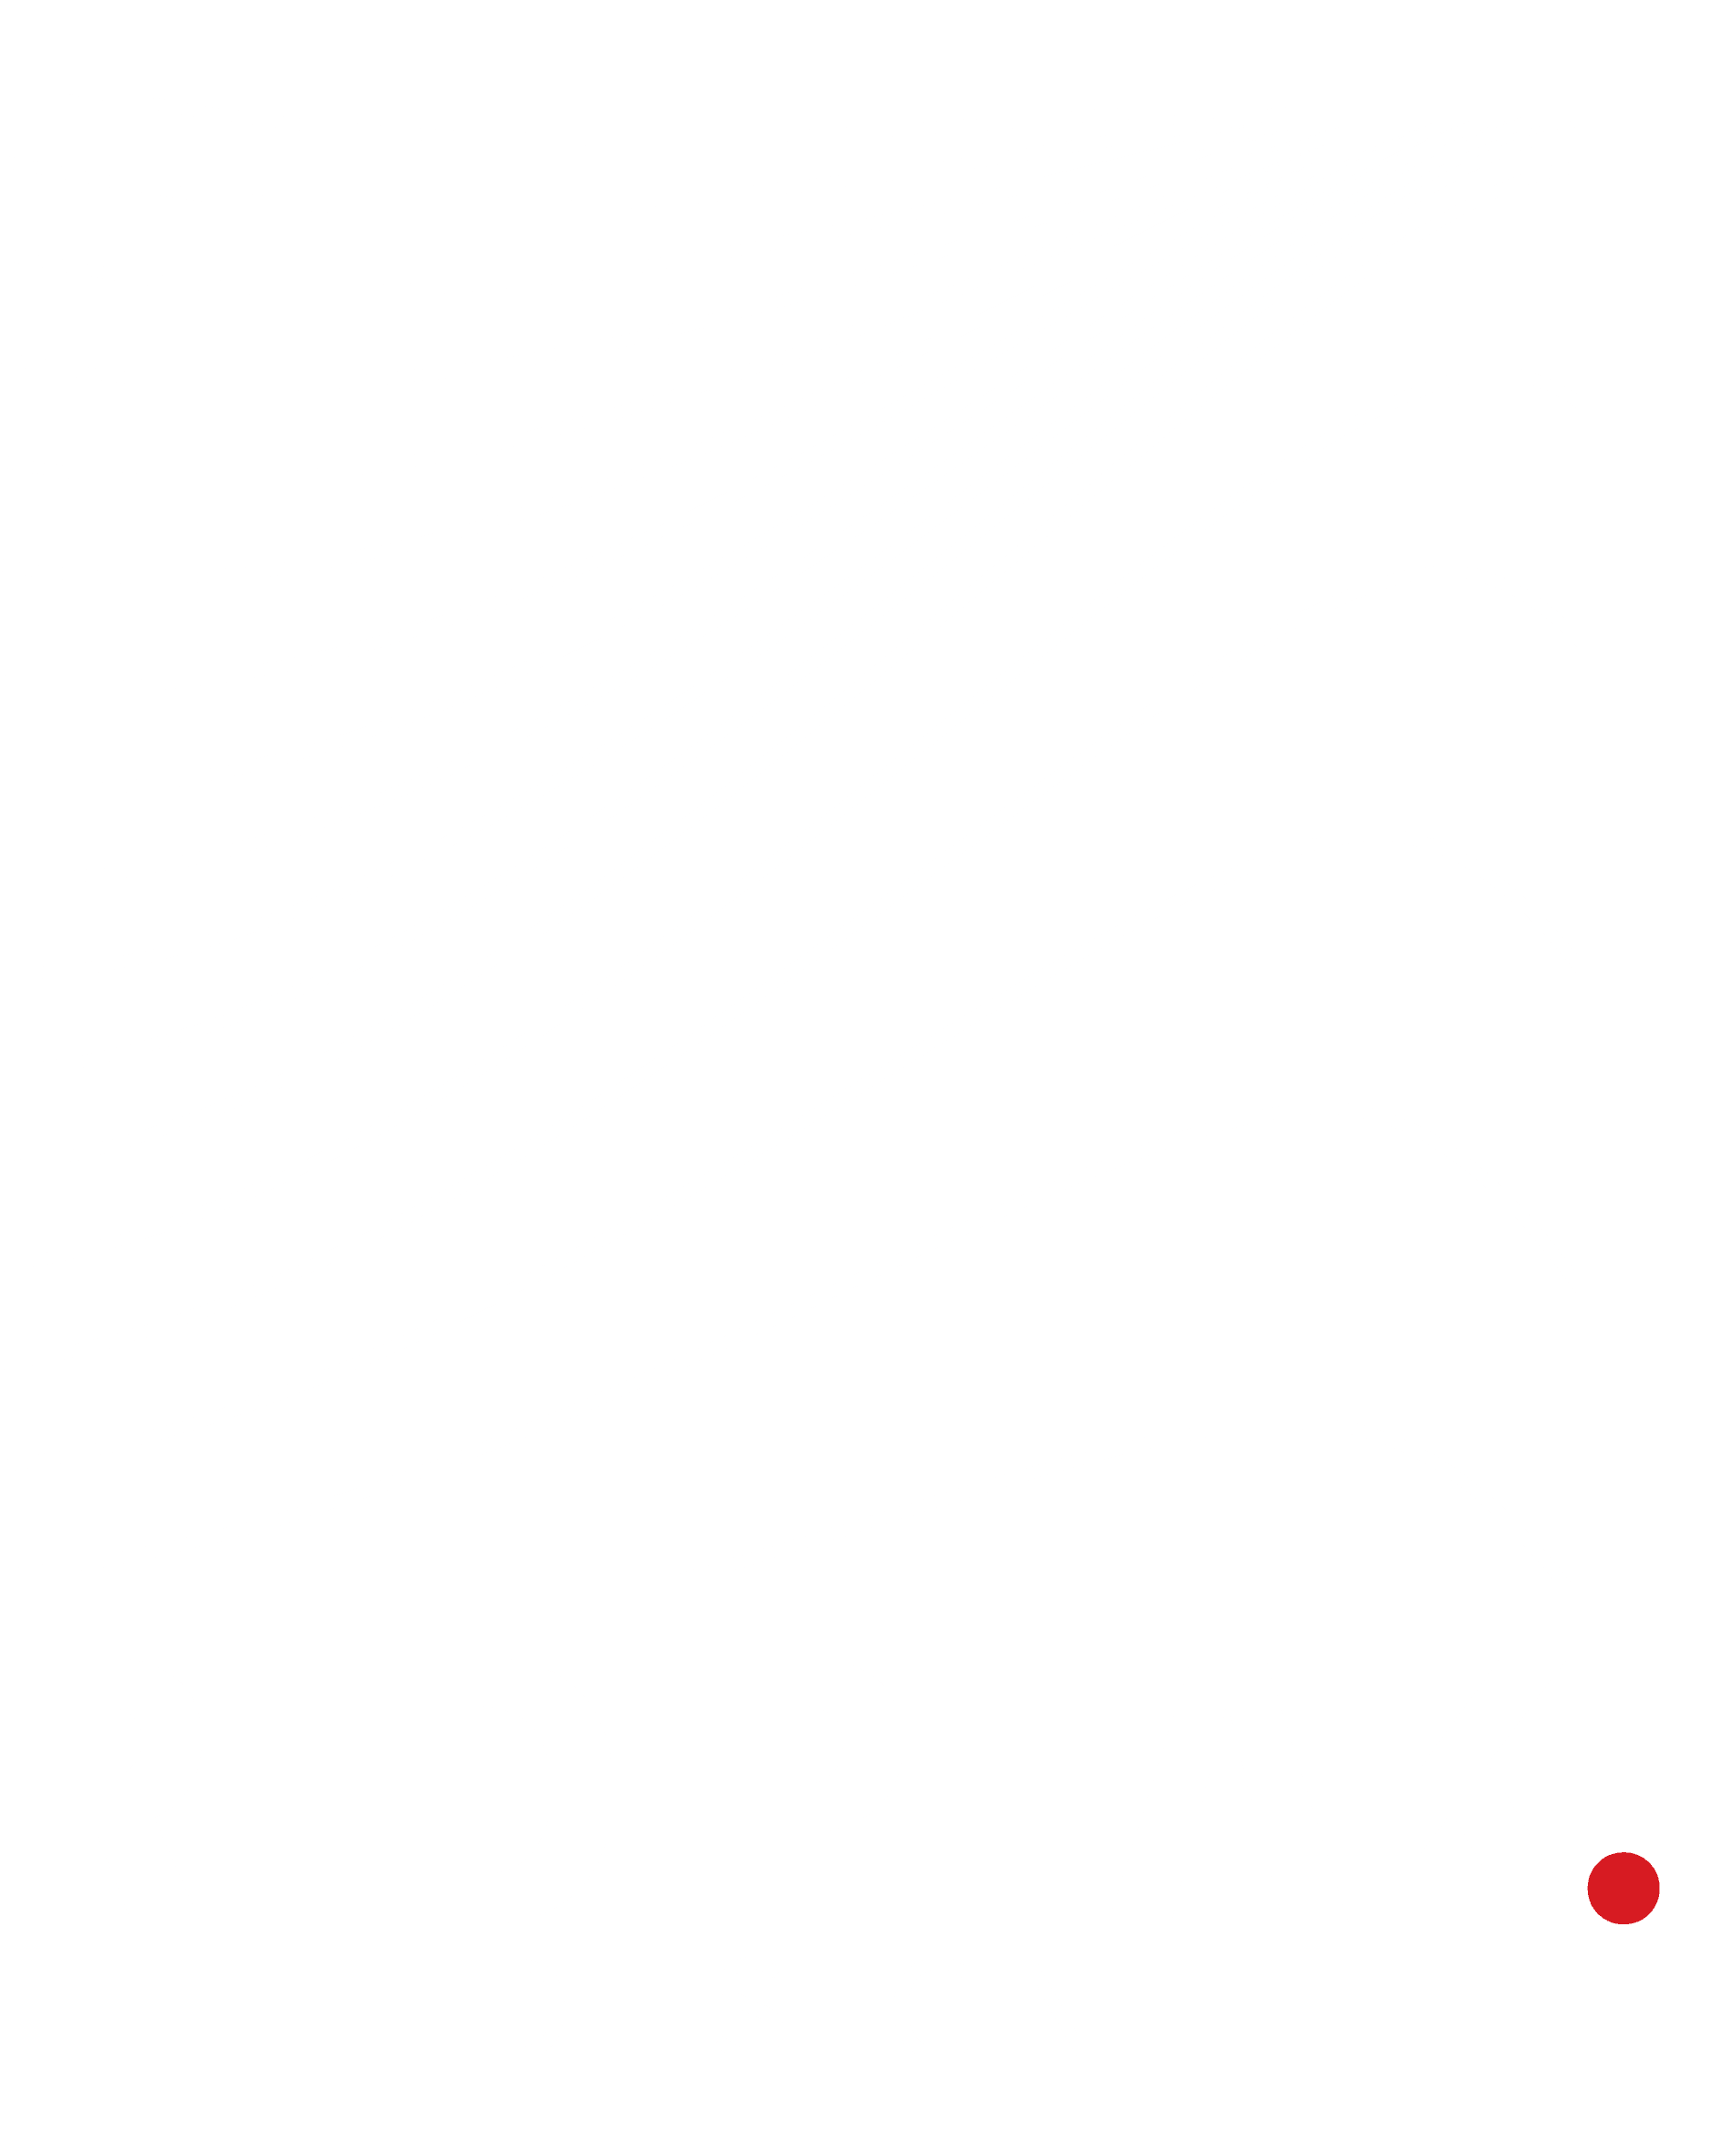 Red and White Peak Logo - Red Peak Design